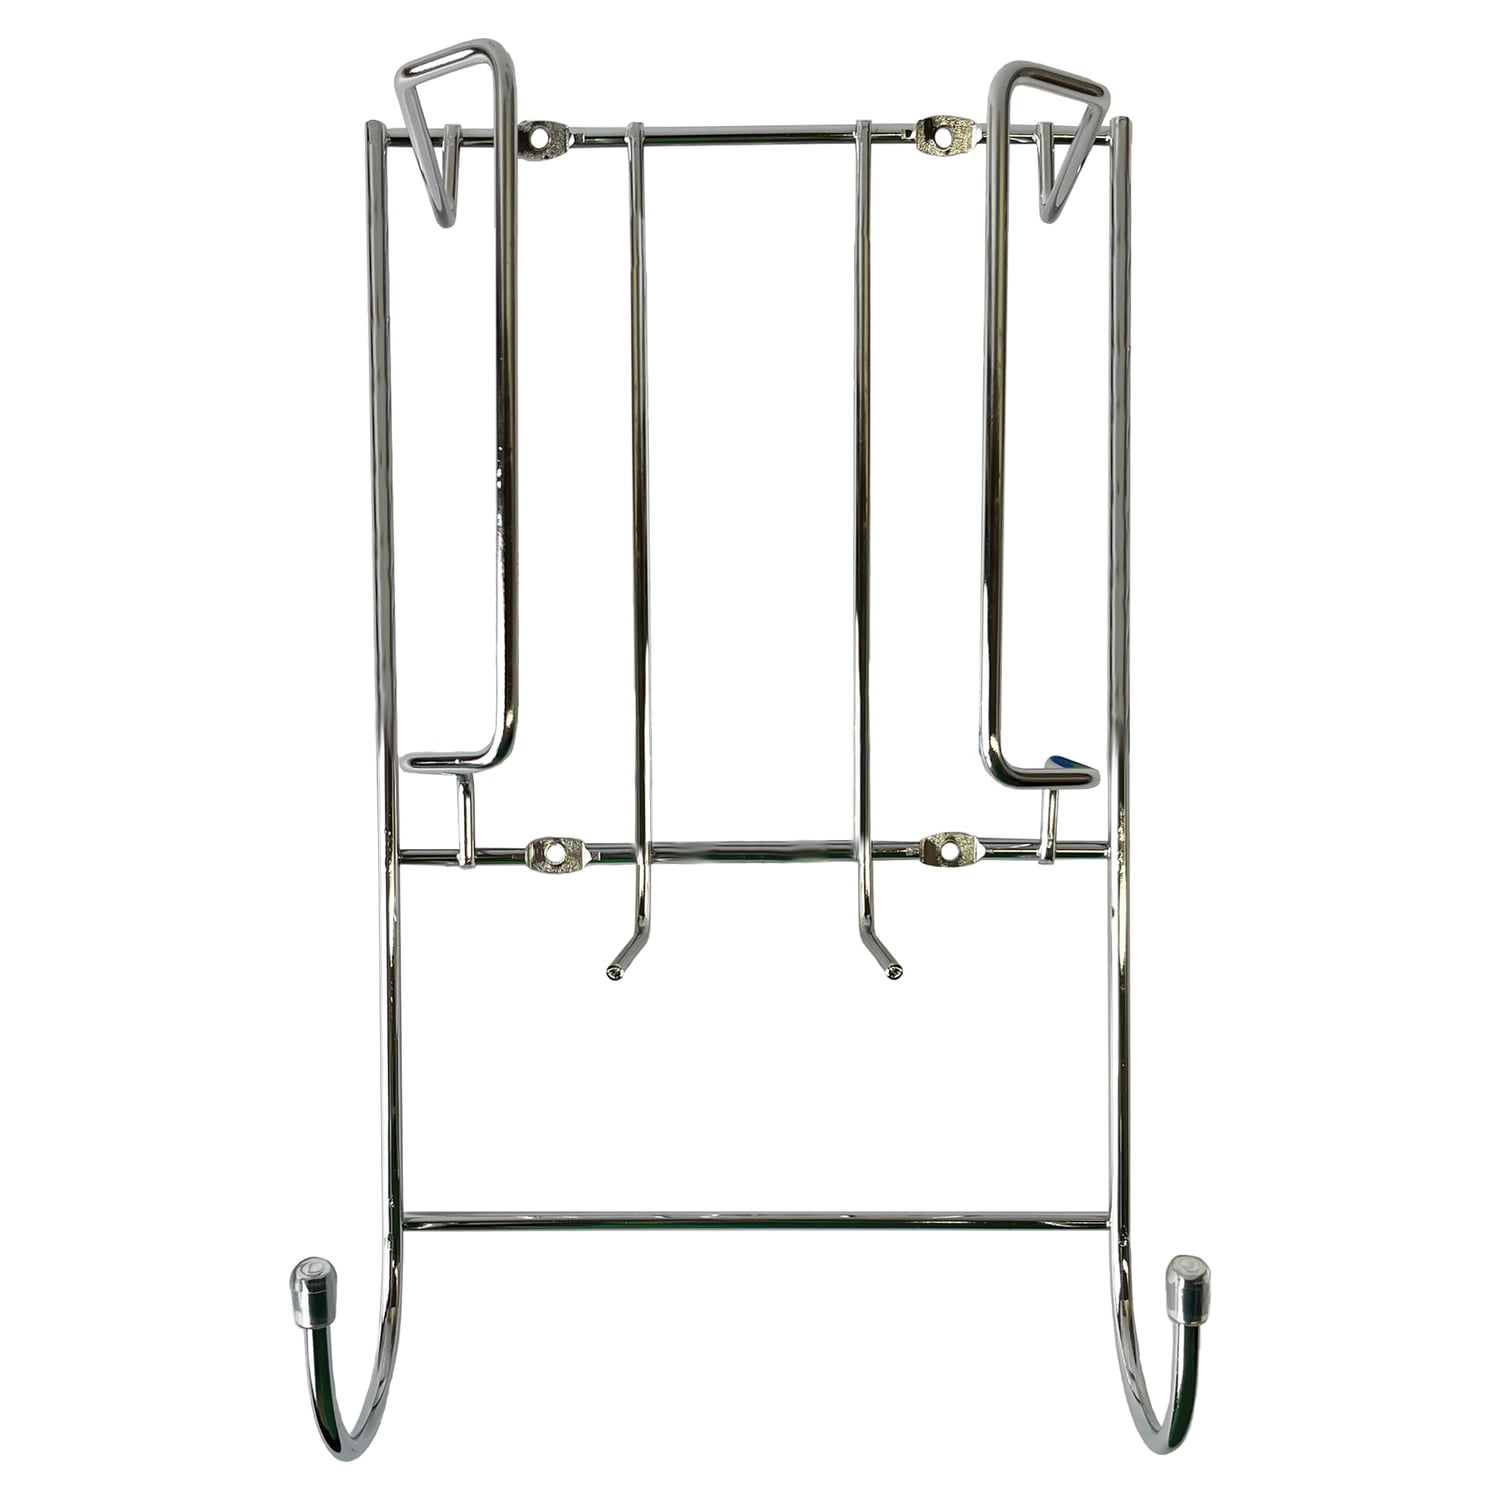 2x Portable Over The Door Chrome Ironing Hooks Hangers Clothes Rack Coat Hanger 